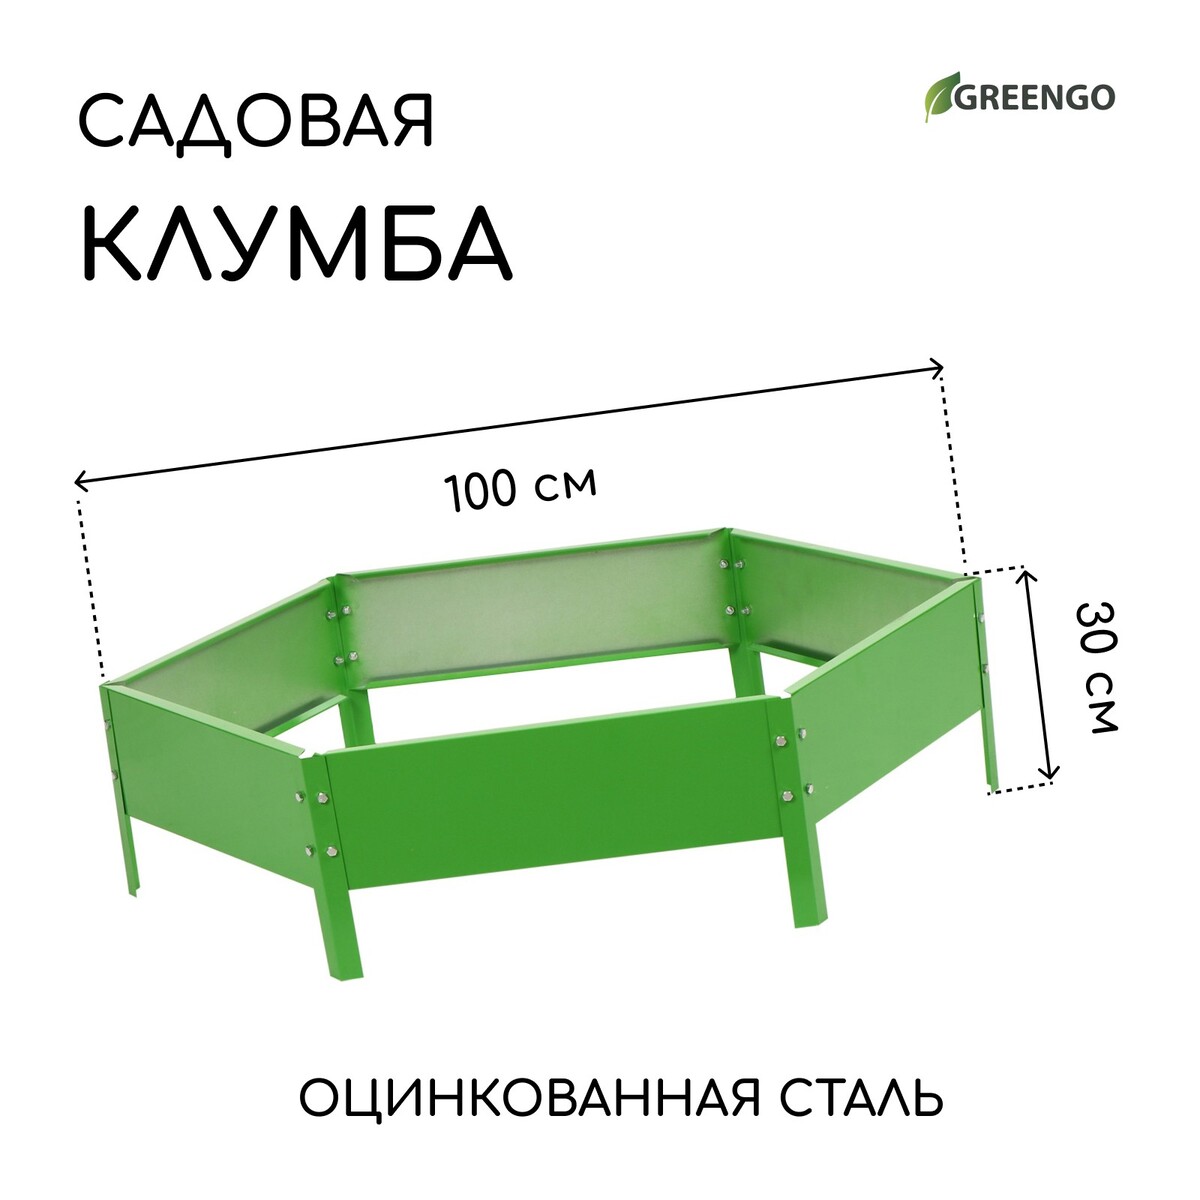 Клумба оцинкованная, d = 100 см, h = 15 см, ярко-зеленая, greengo клумба оцинкованная 50 × 50 × 15 см ярко зеленая greengo